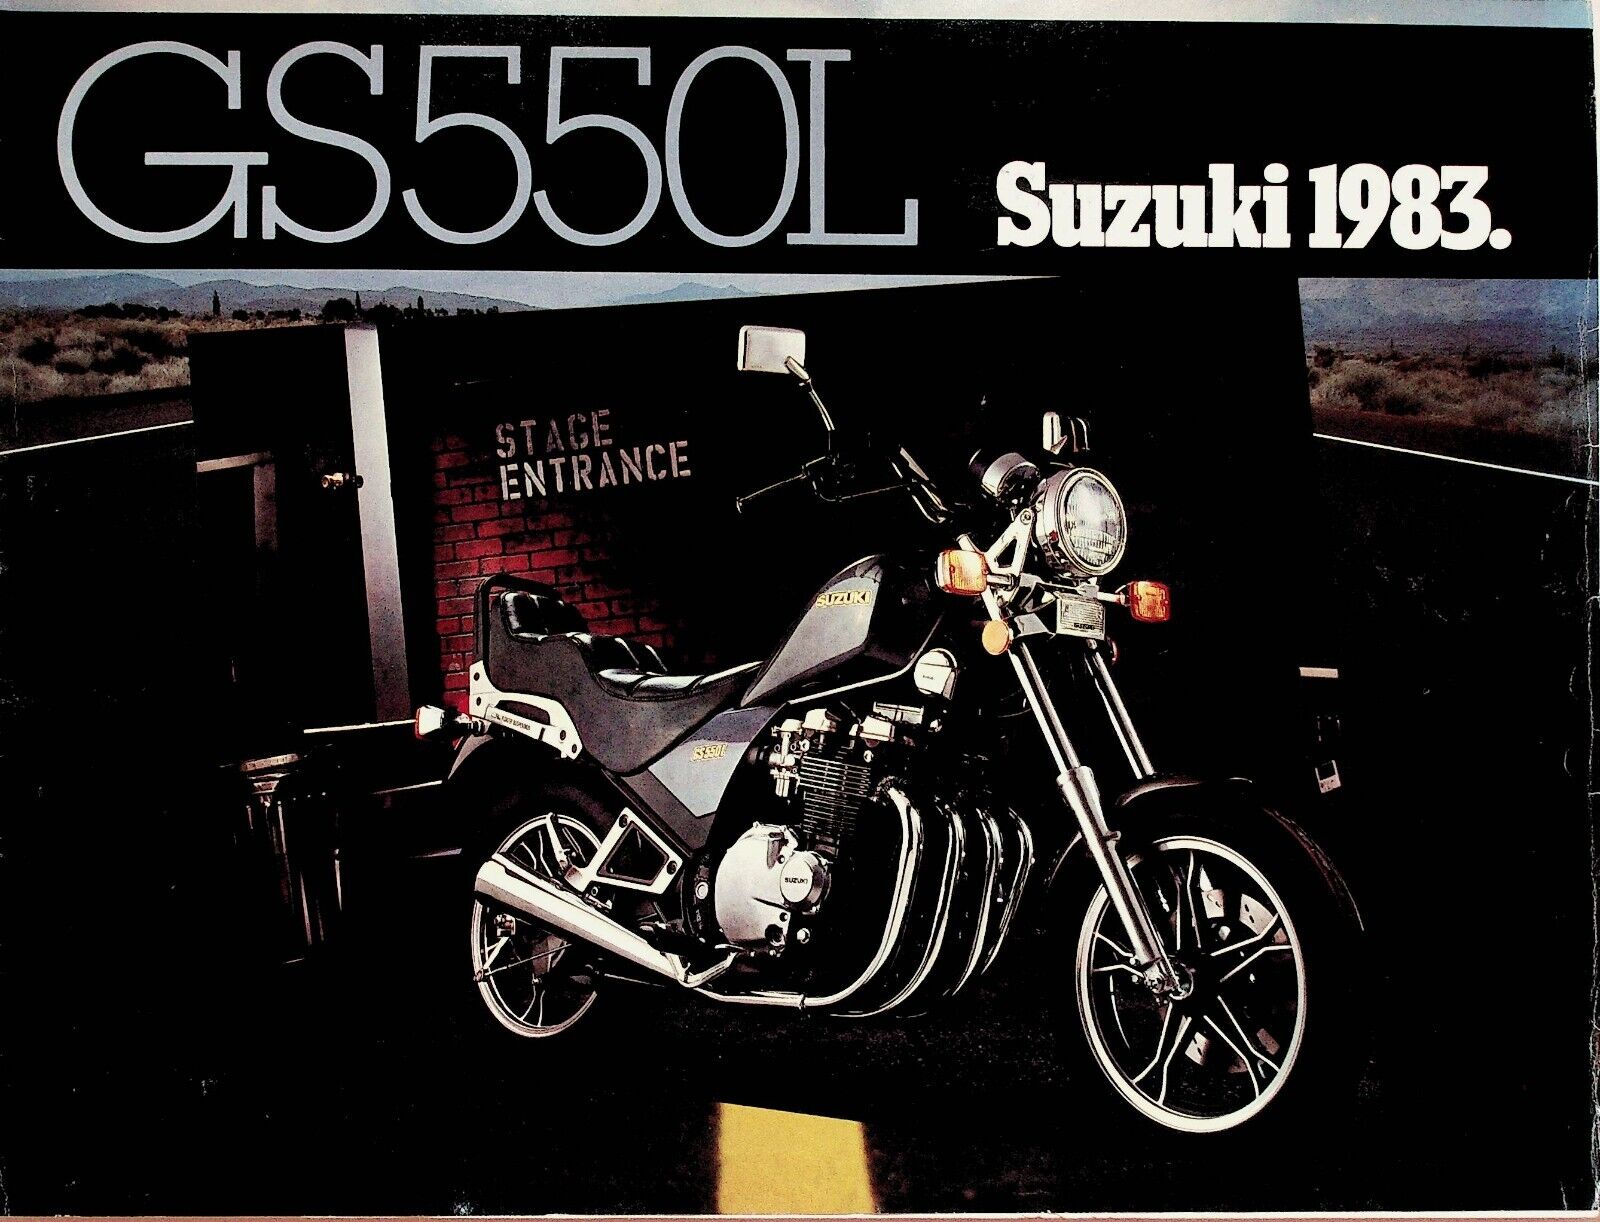 1983 Suzuki GS550L - 4-Page Vintage Motorcycle Ad